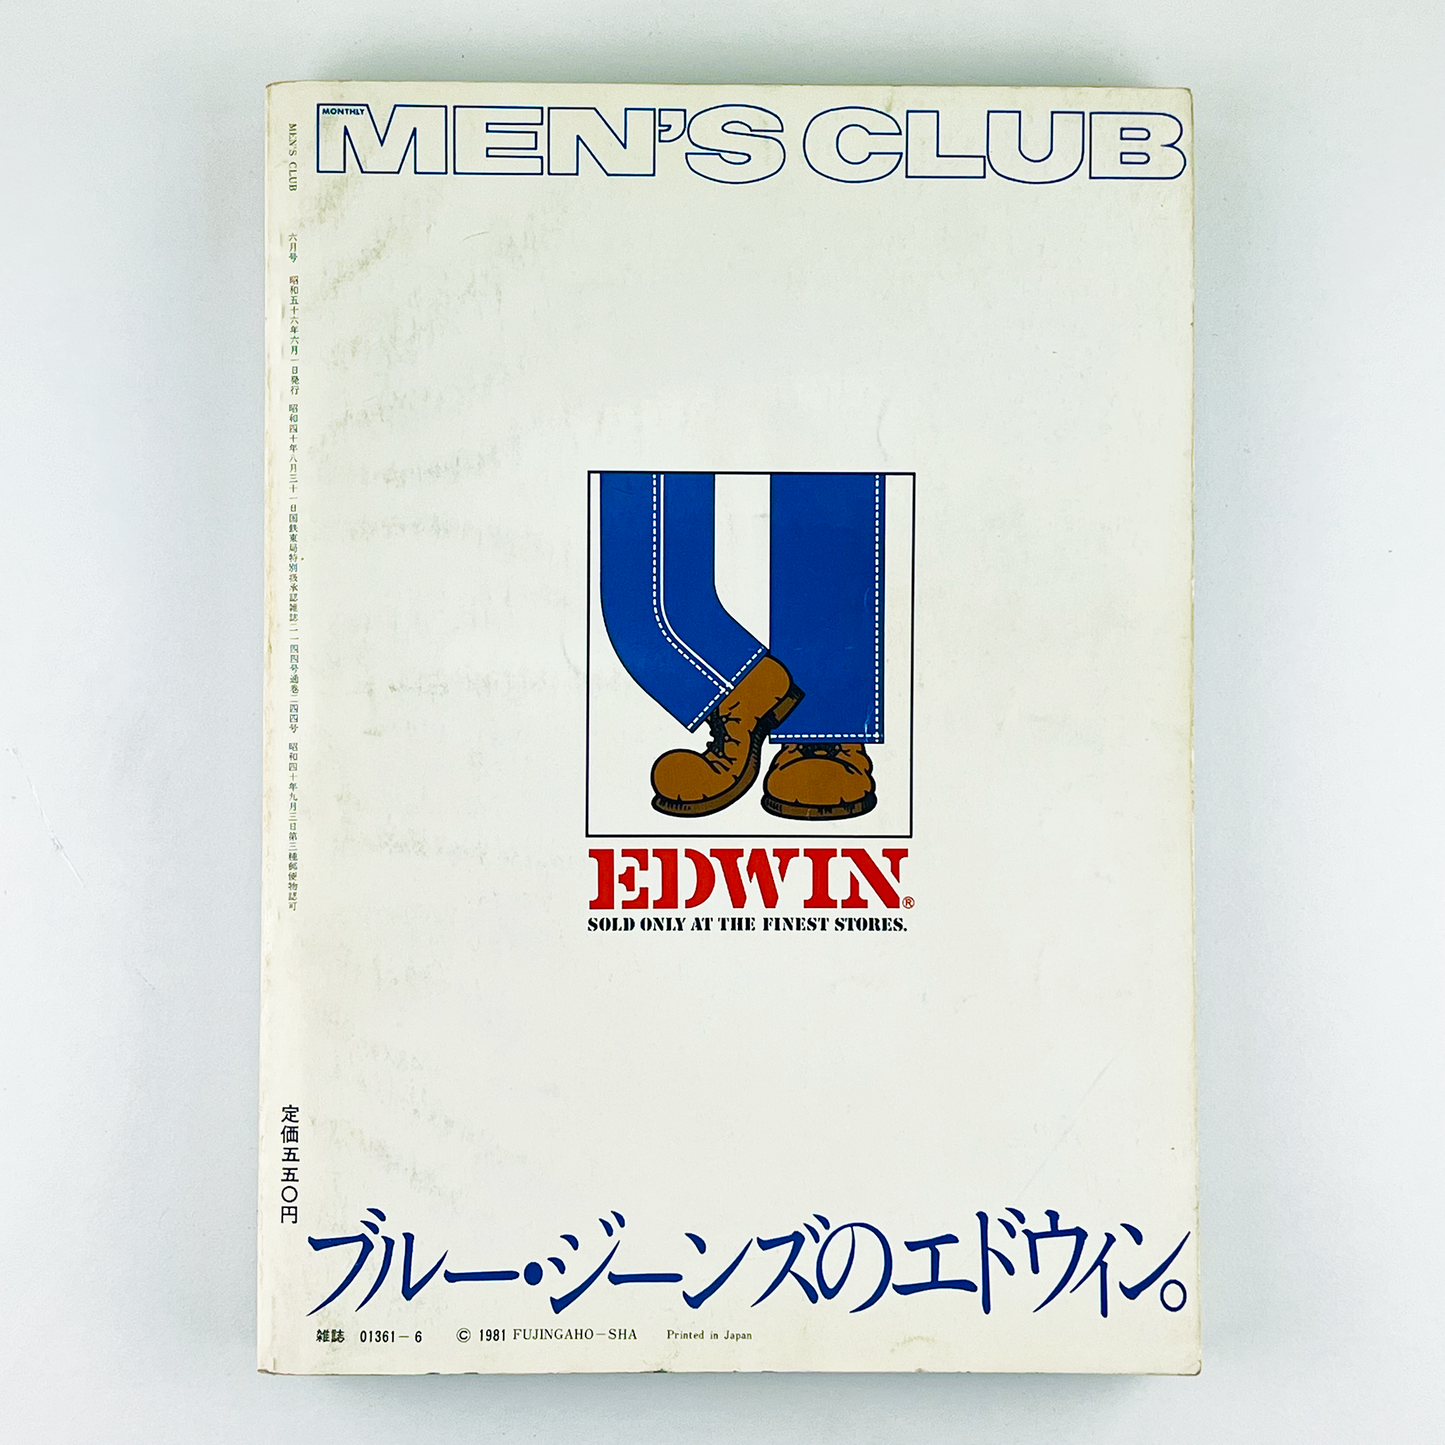 MEN'S CLUB 6月号 NO.244 昭和56年6月｜メンズクラブ編集部